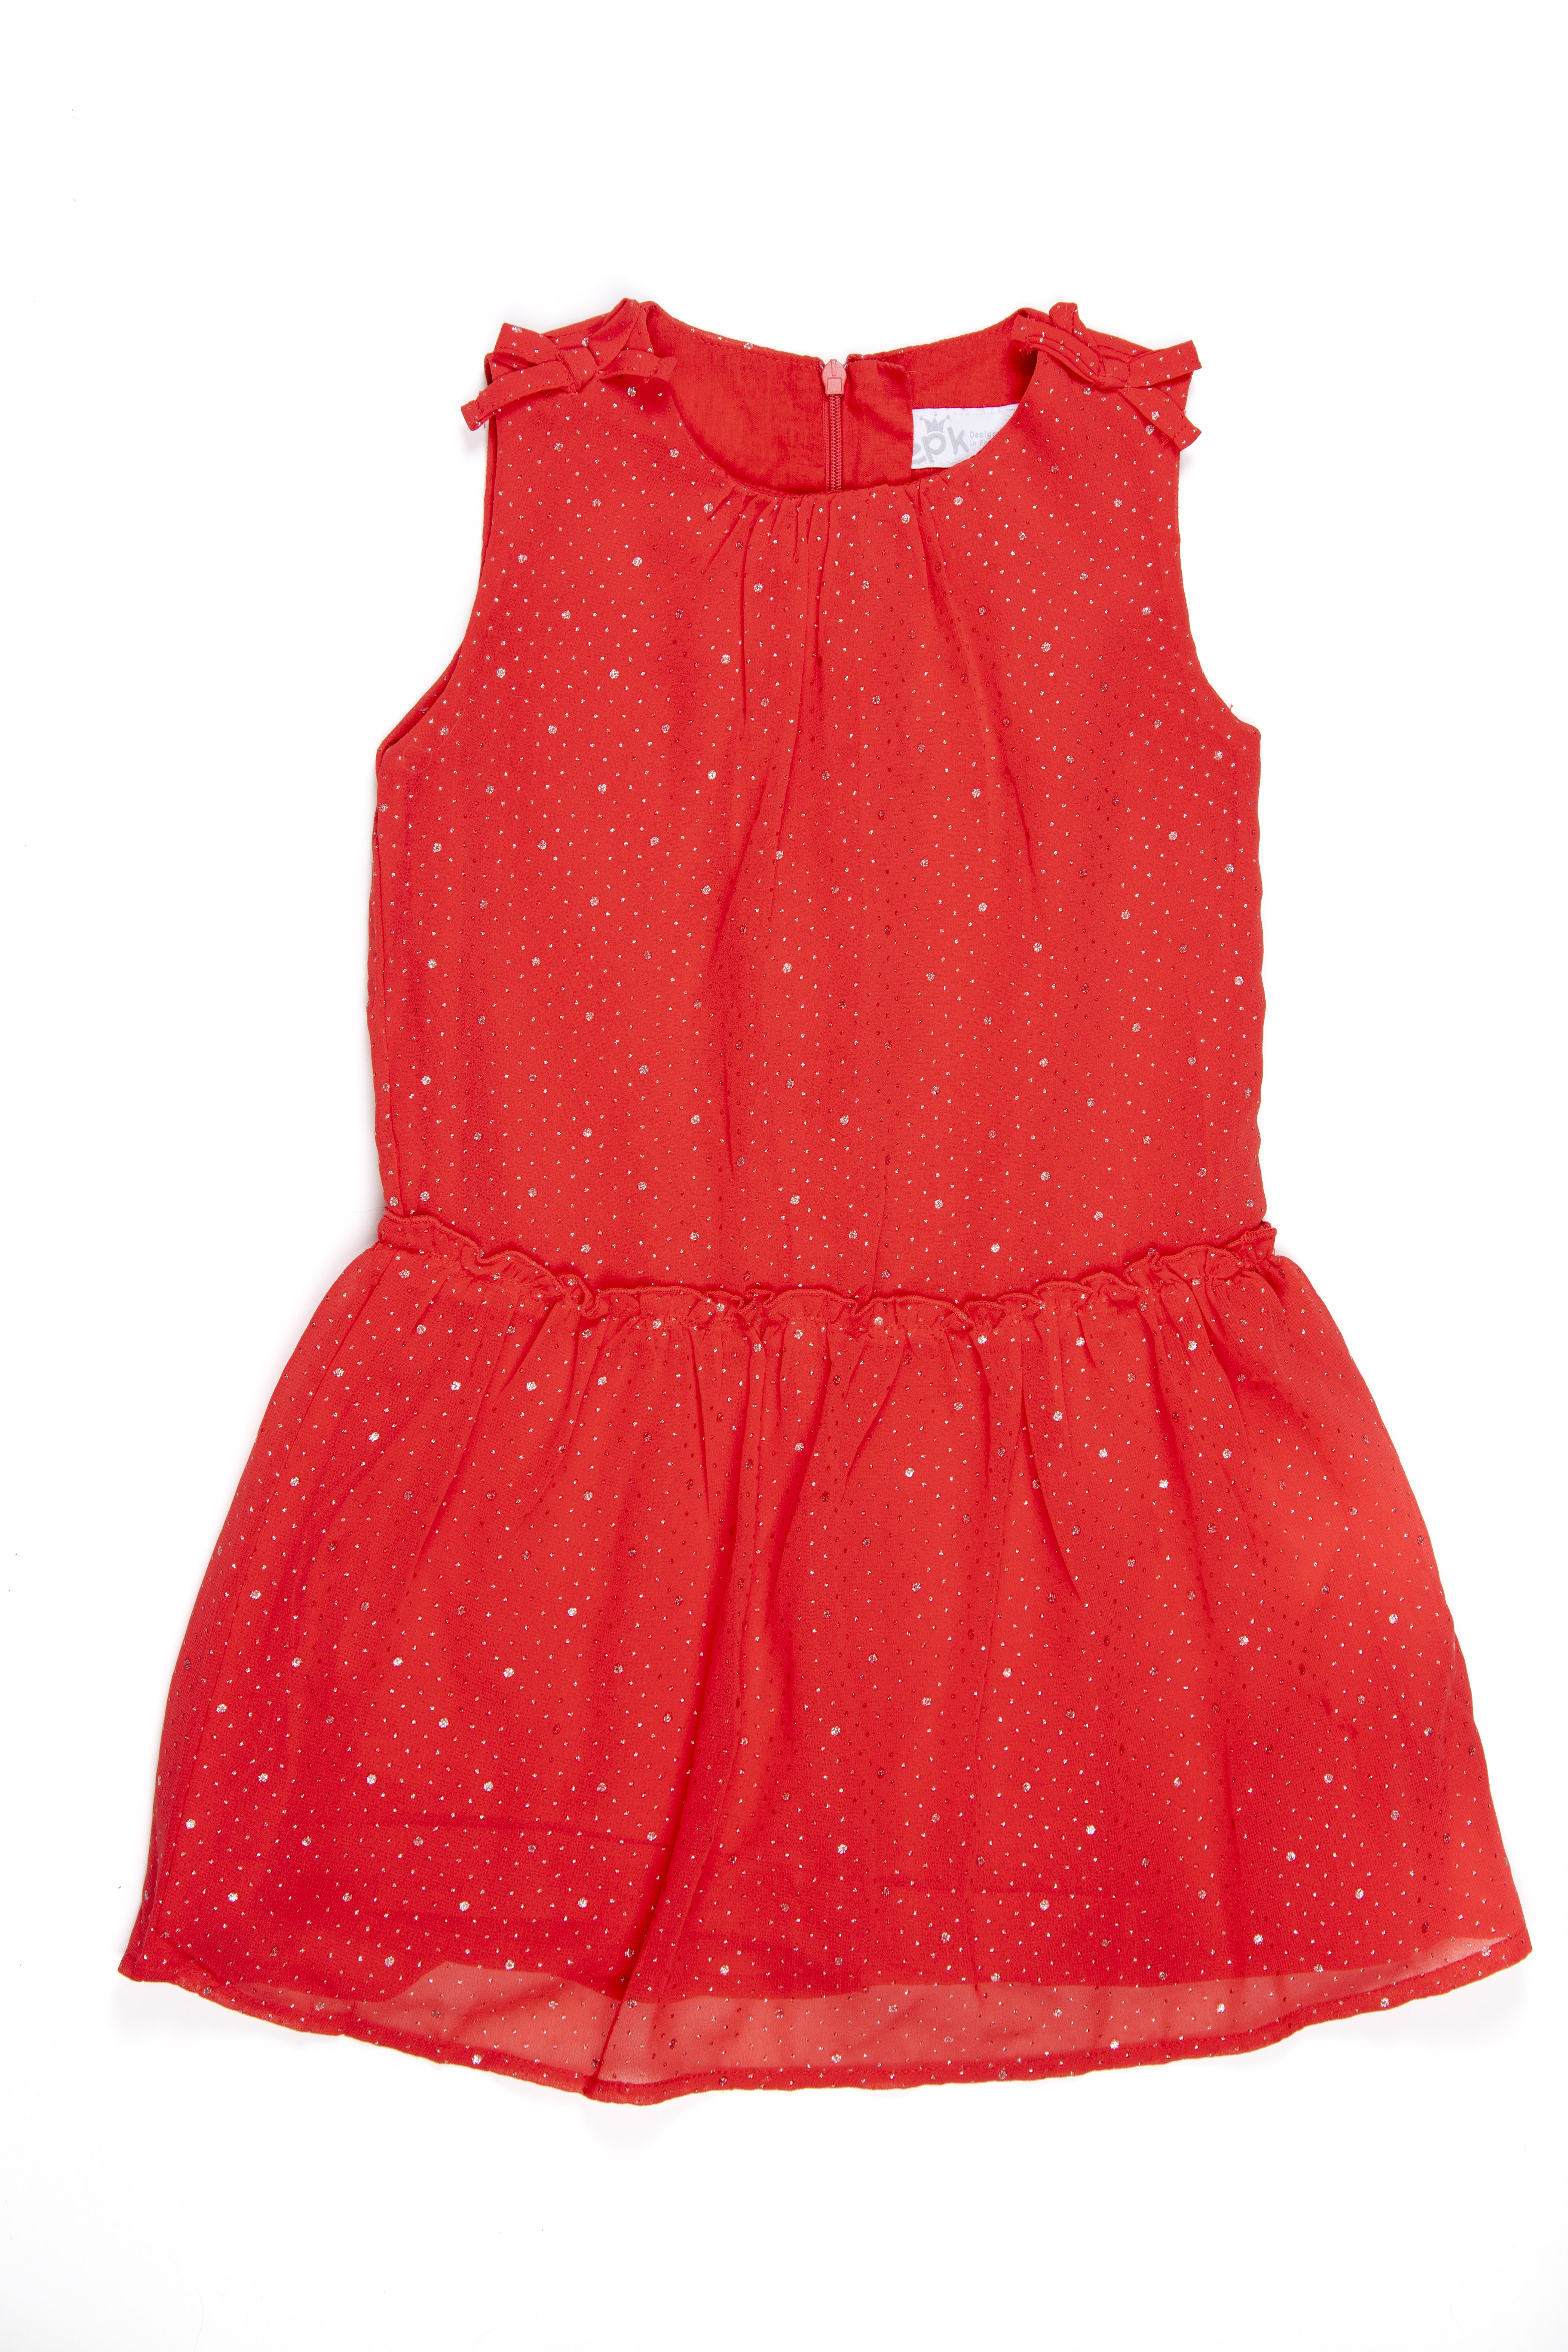 Vestido rojo fresa de gasa con detalles plateados. Forrado en algodón. Lazos en hombros - EPK